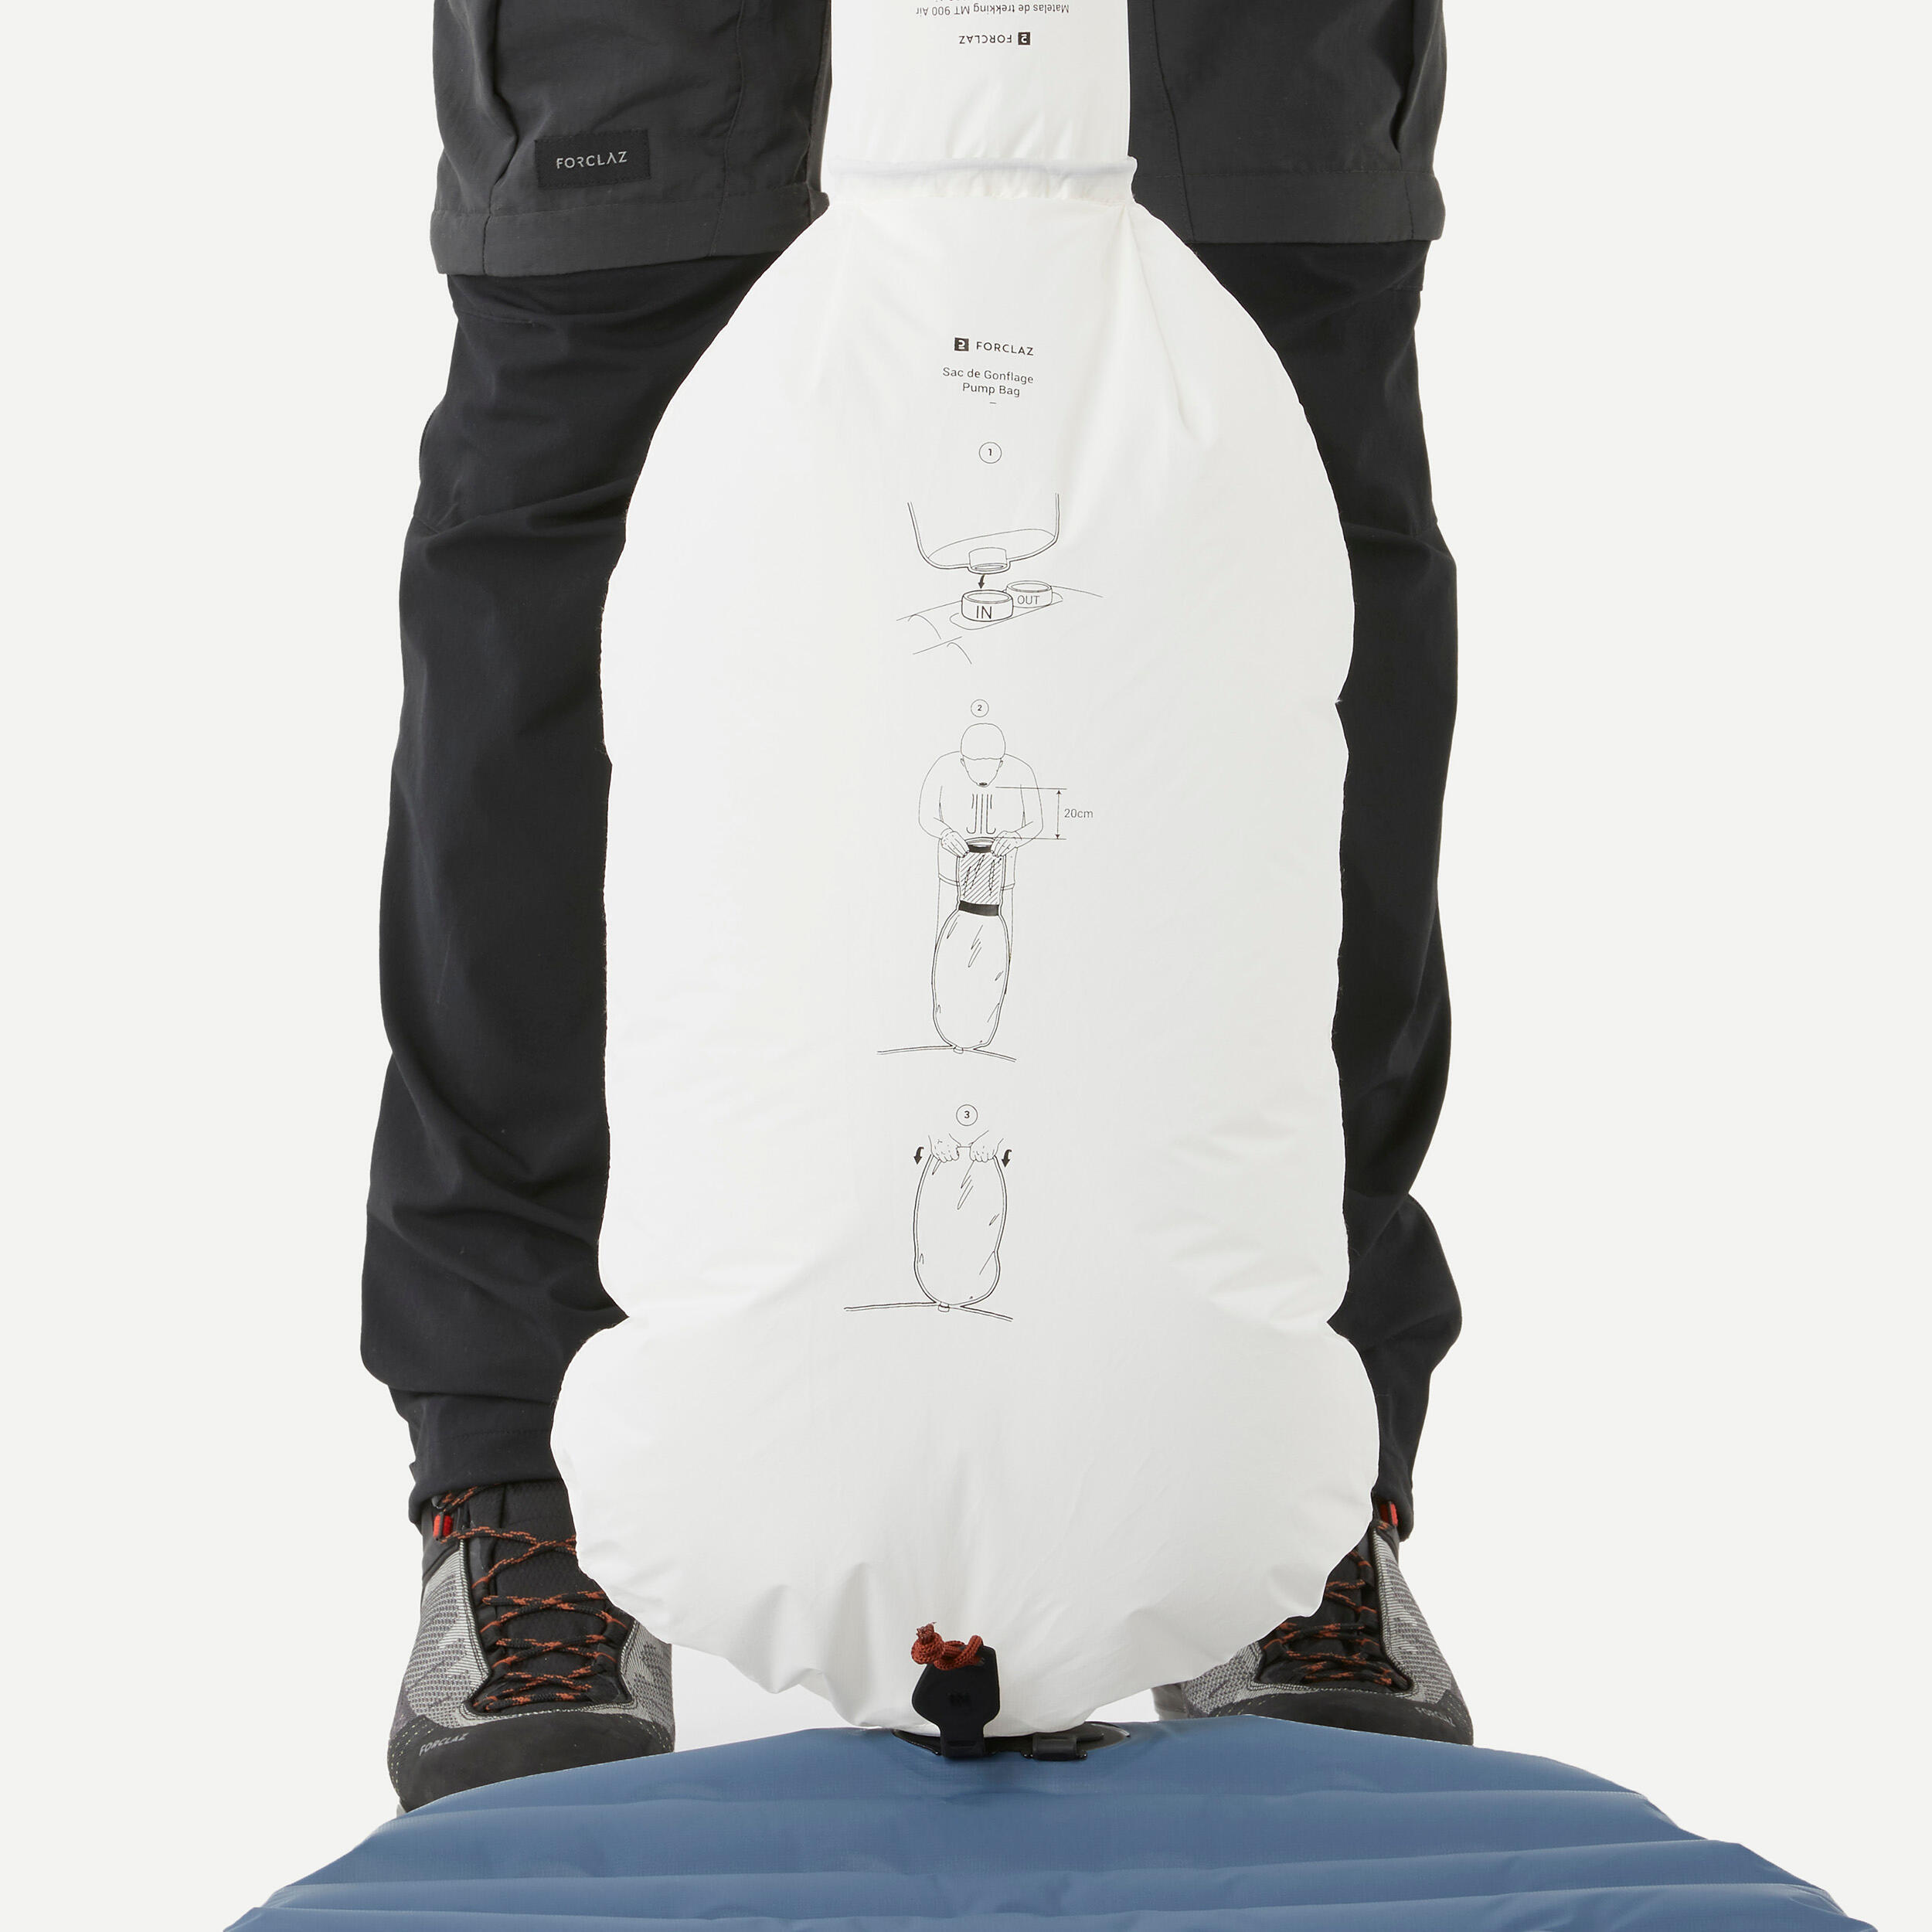 Inflatable trekking mattress - MT900 air XL - 195 x 60 cm - 1-person 6/7